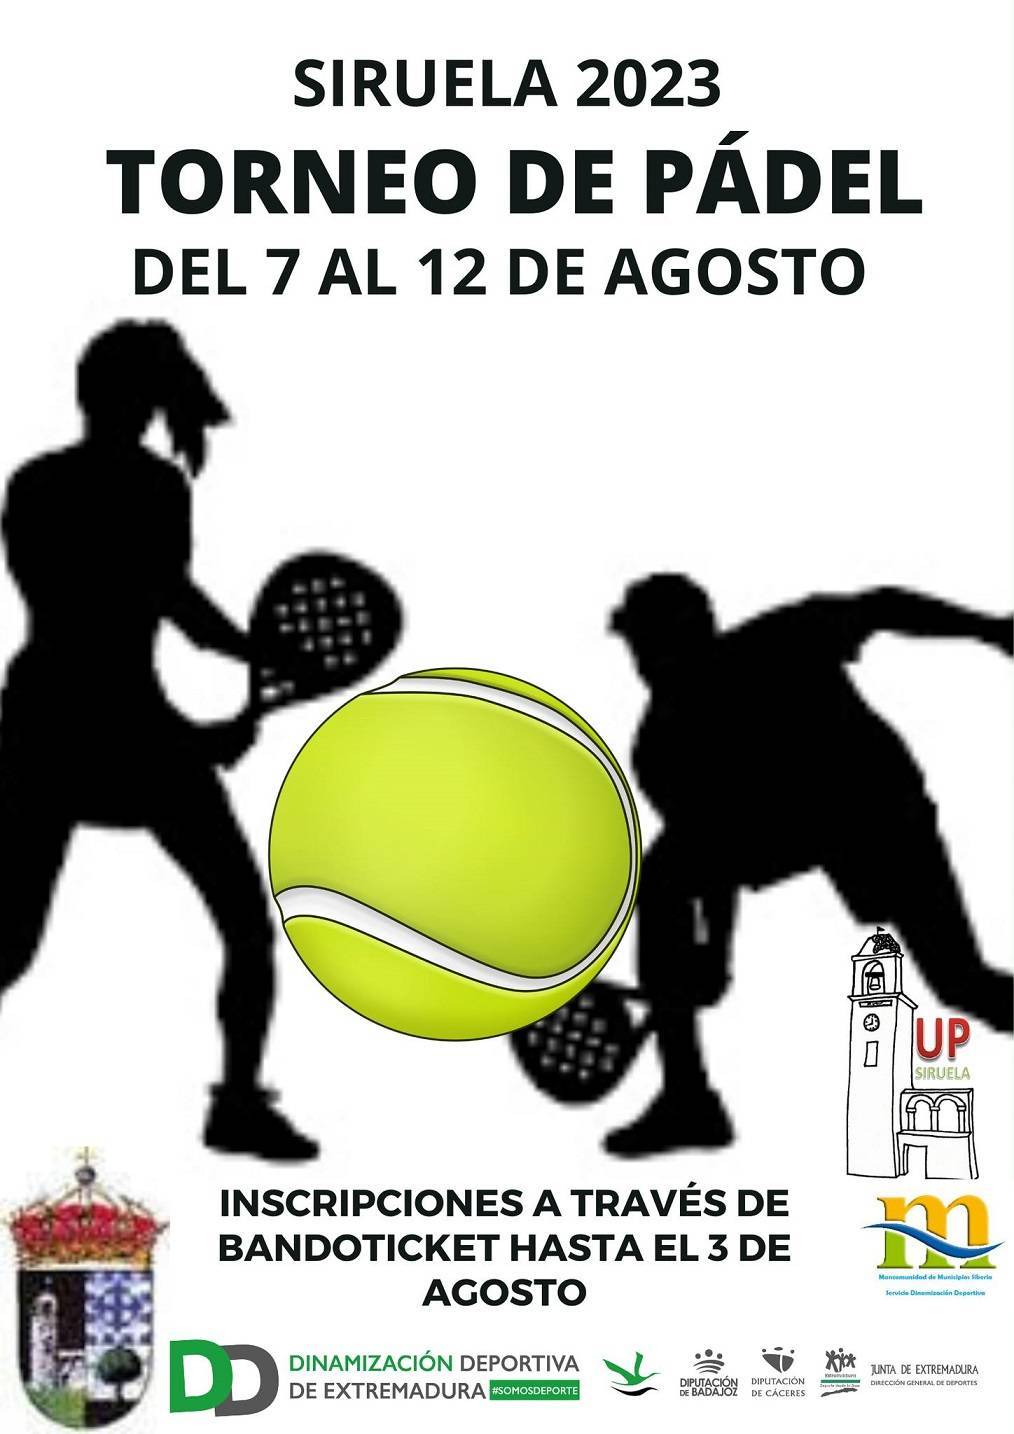 Torneo de pádel (2023) - Siruela (Badajoz)